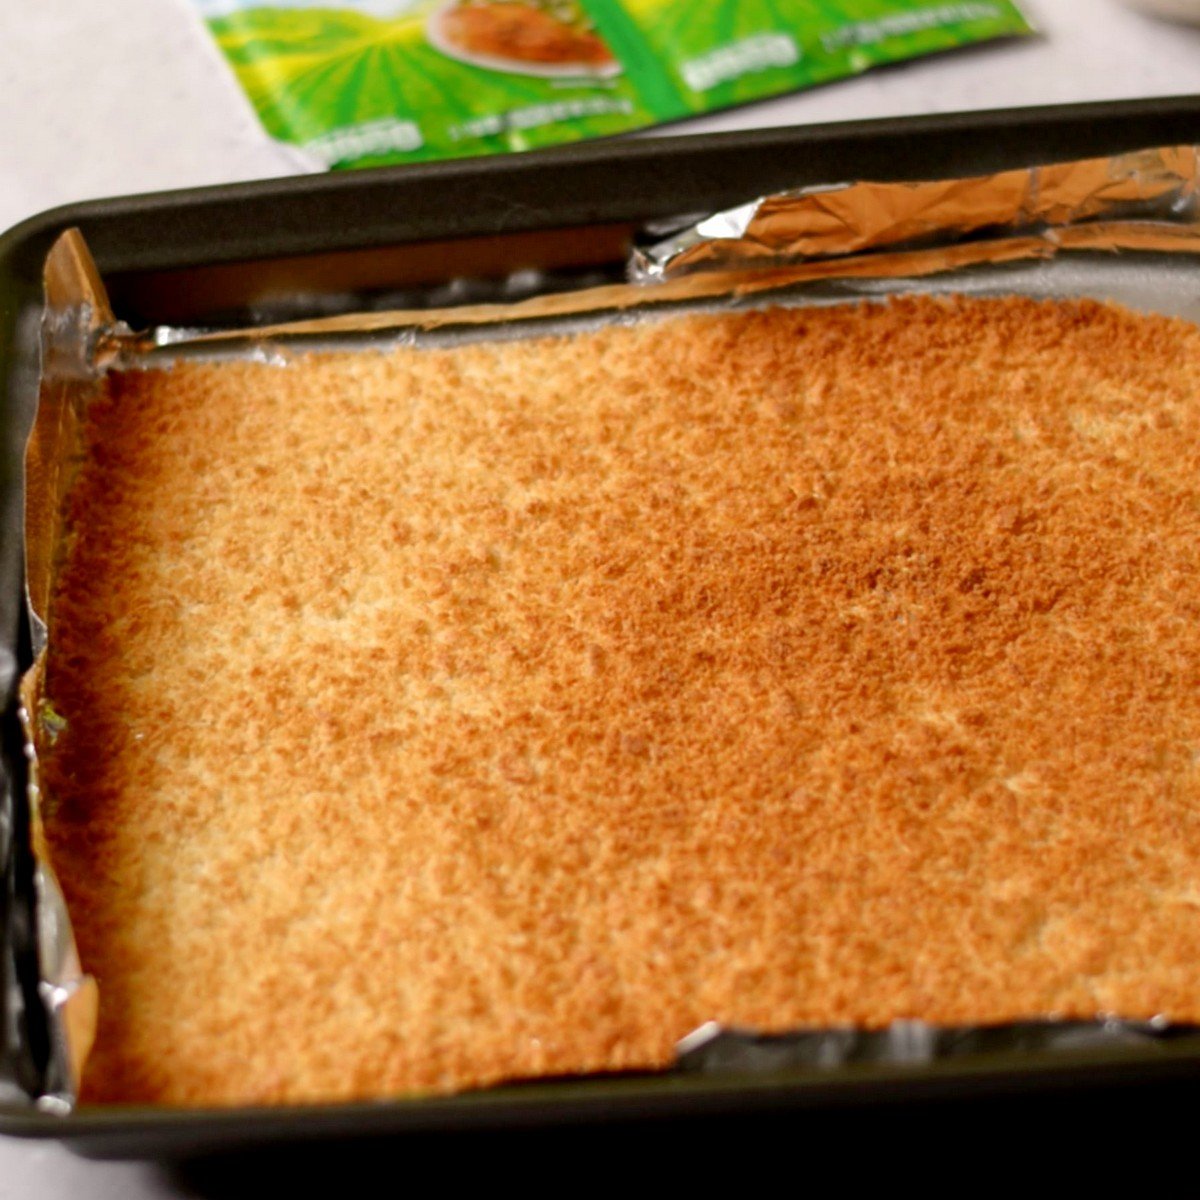 Toasted panko breadcrumbs on a baking tray.